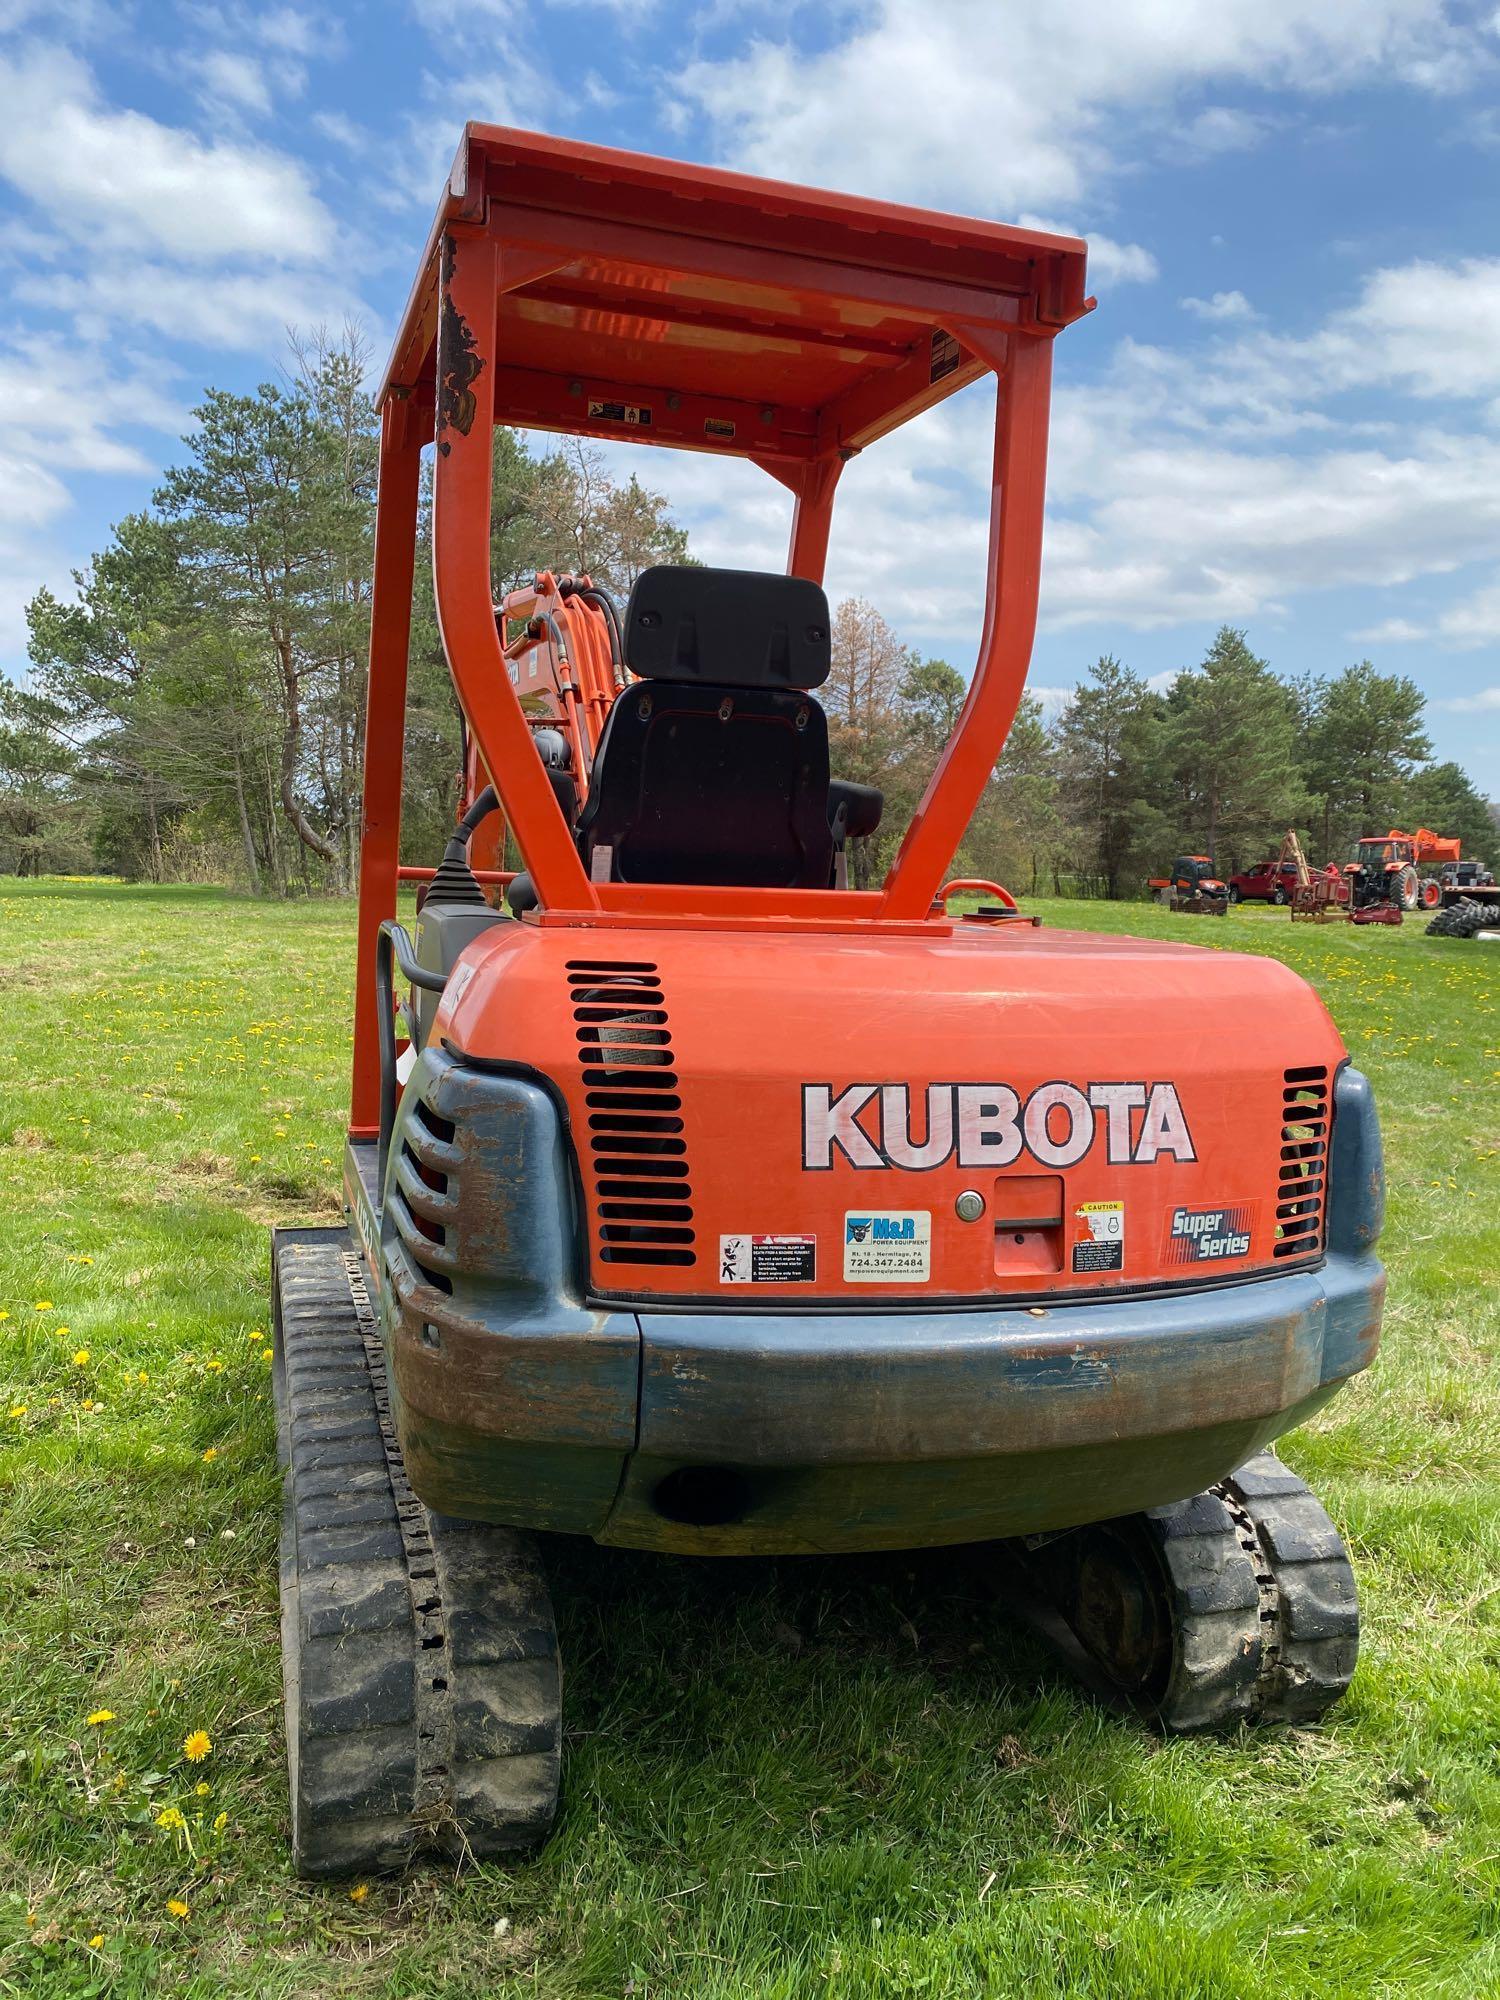 Kubota KX121-2 excavator super series